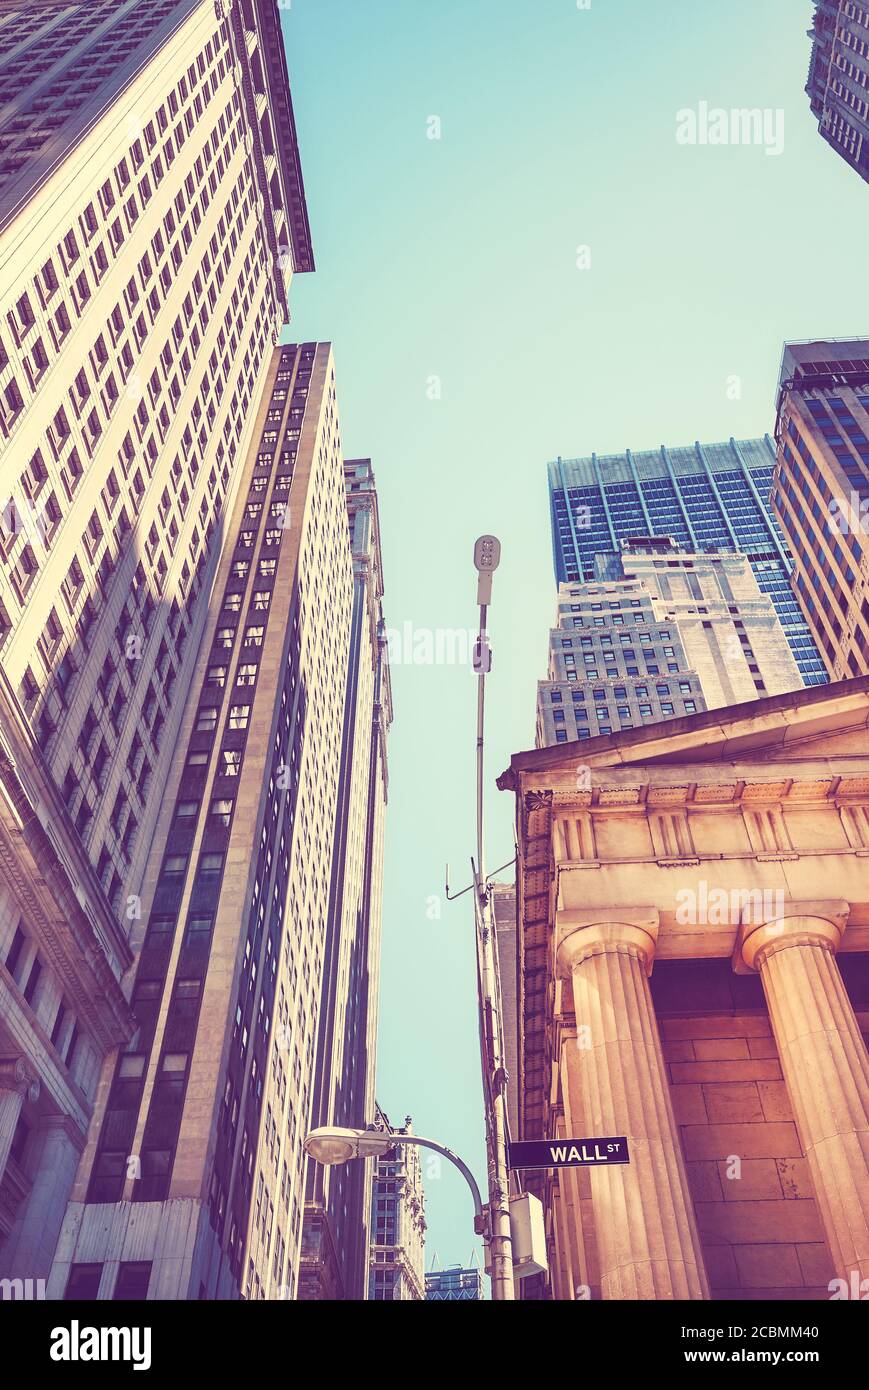 Immagine in tonalità vintage di Wall Street a Manhattan, New York City, USA. Foto Stock